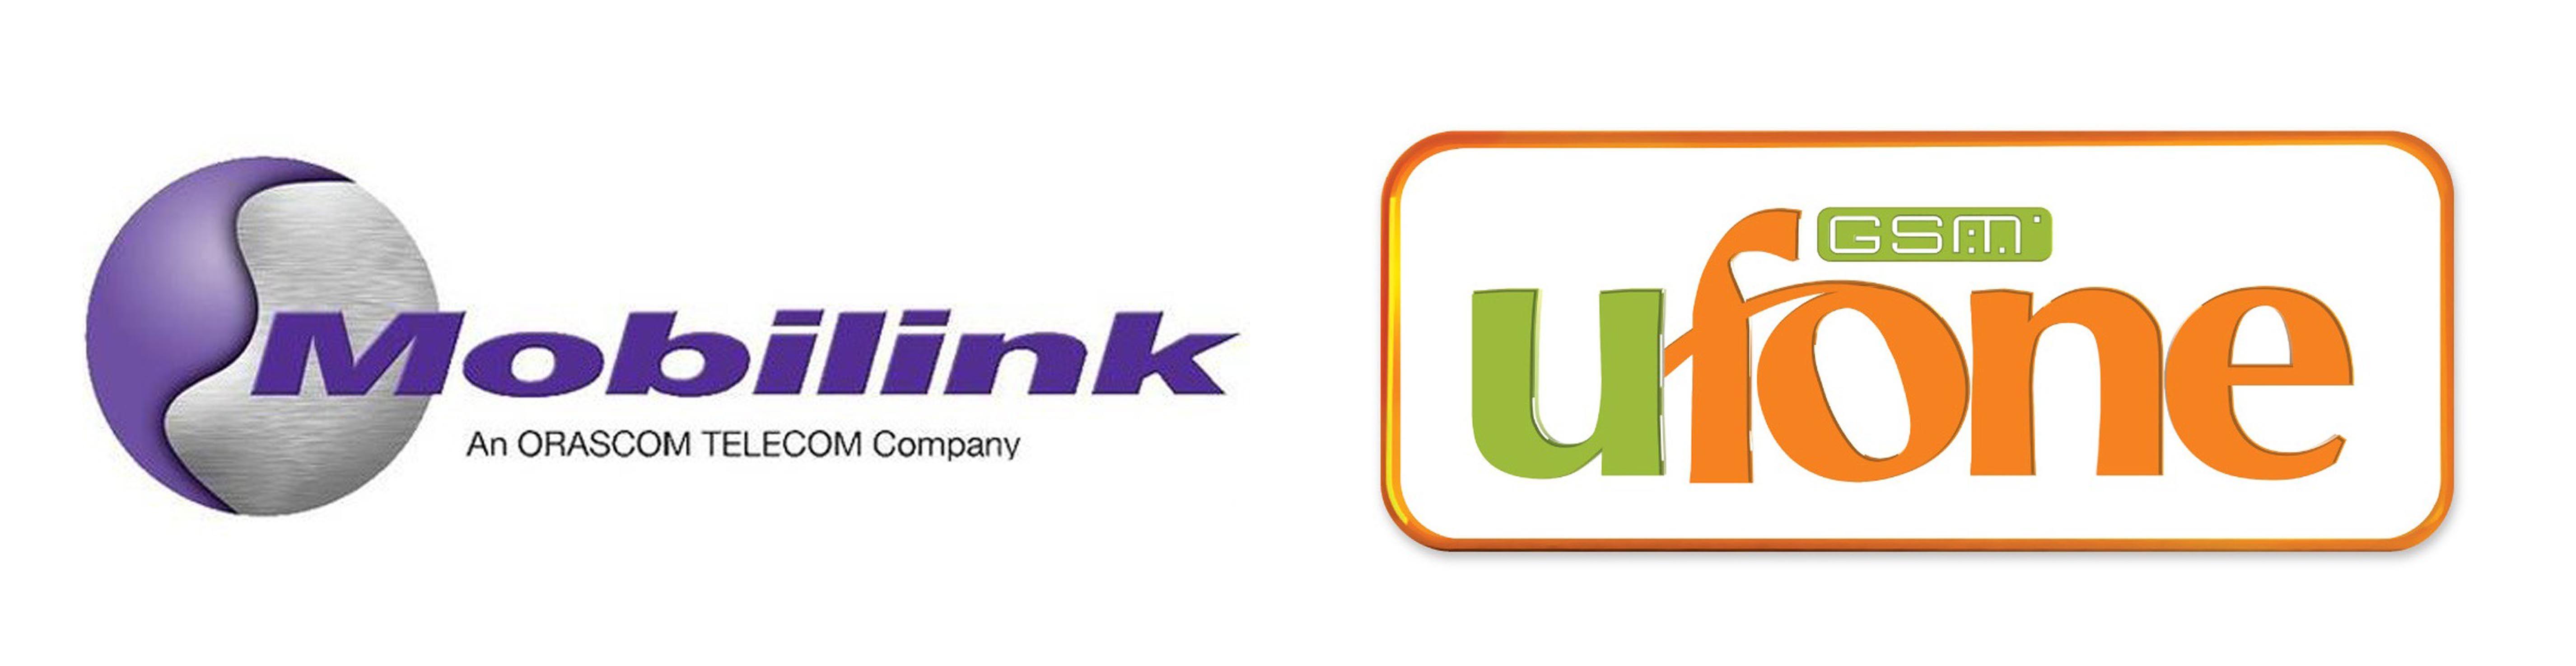 Ufone Logo - Mobilink & Ufone Logo